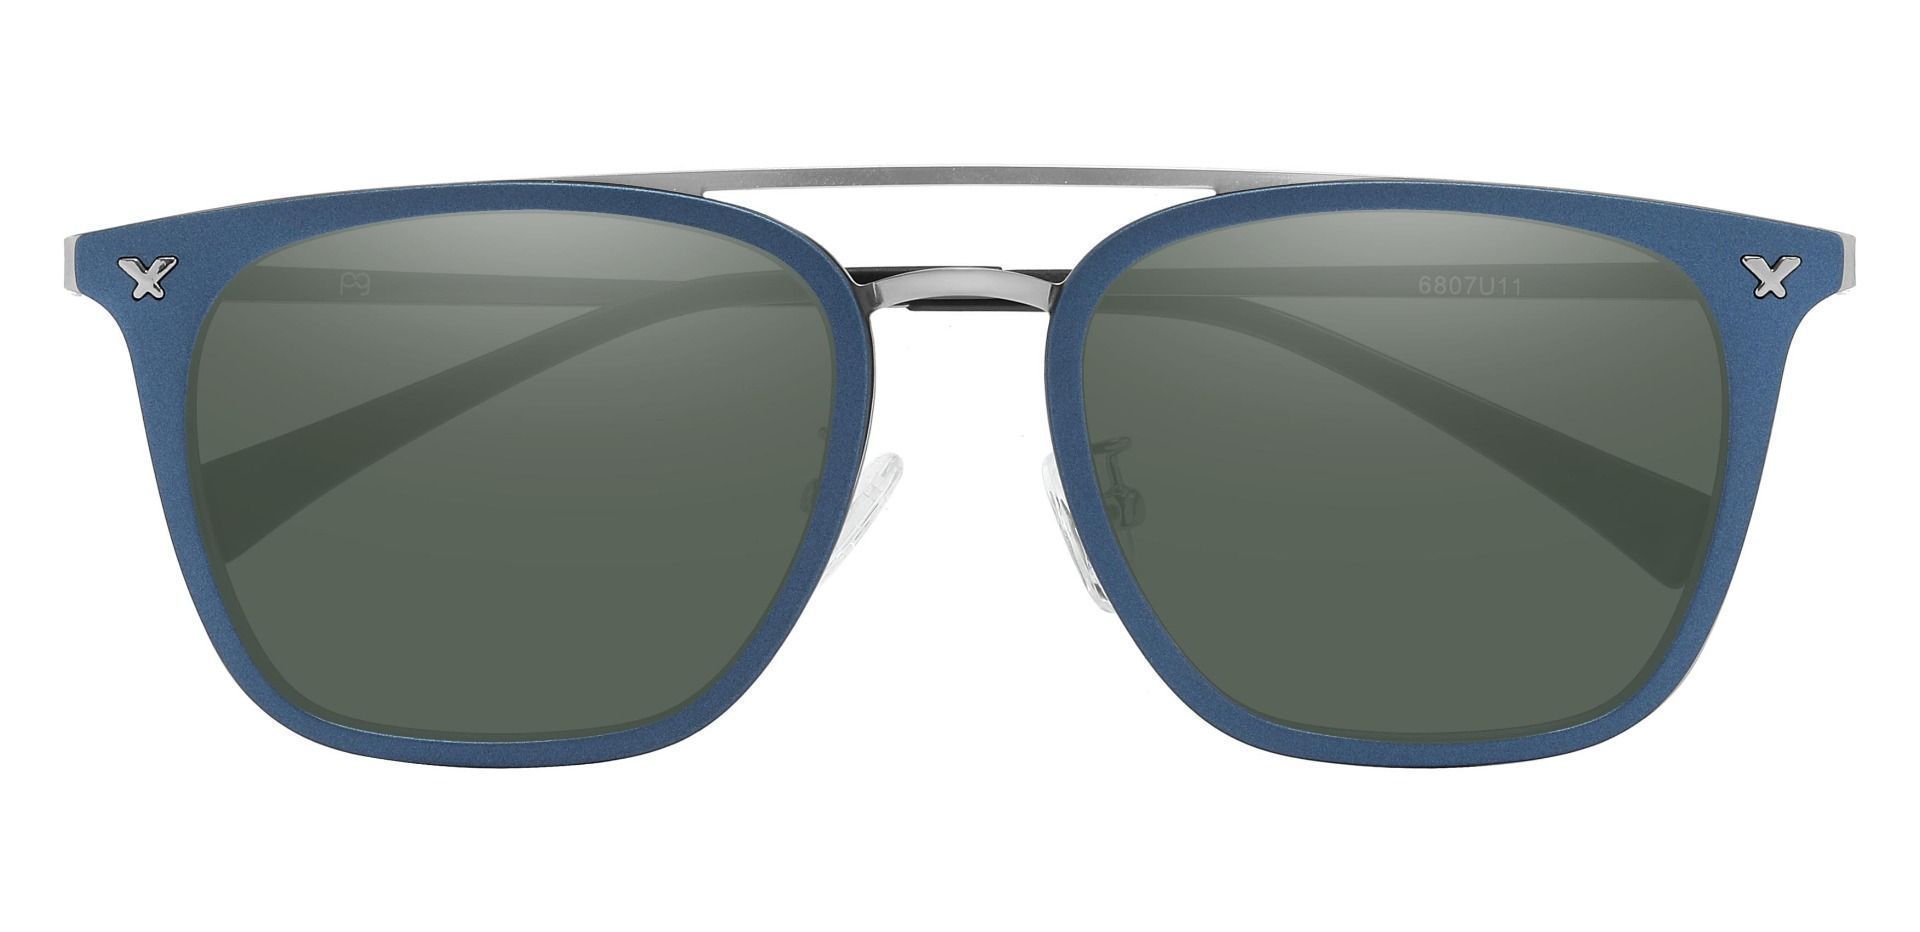 Francois Aviator Prescription Sunglasses - Blue Frame With Green Lenses